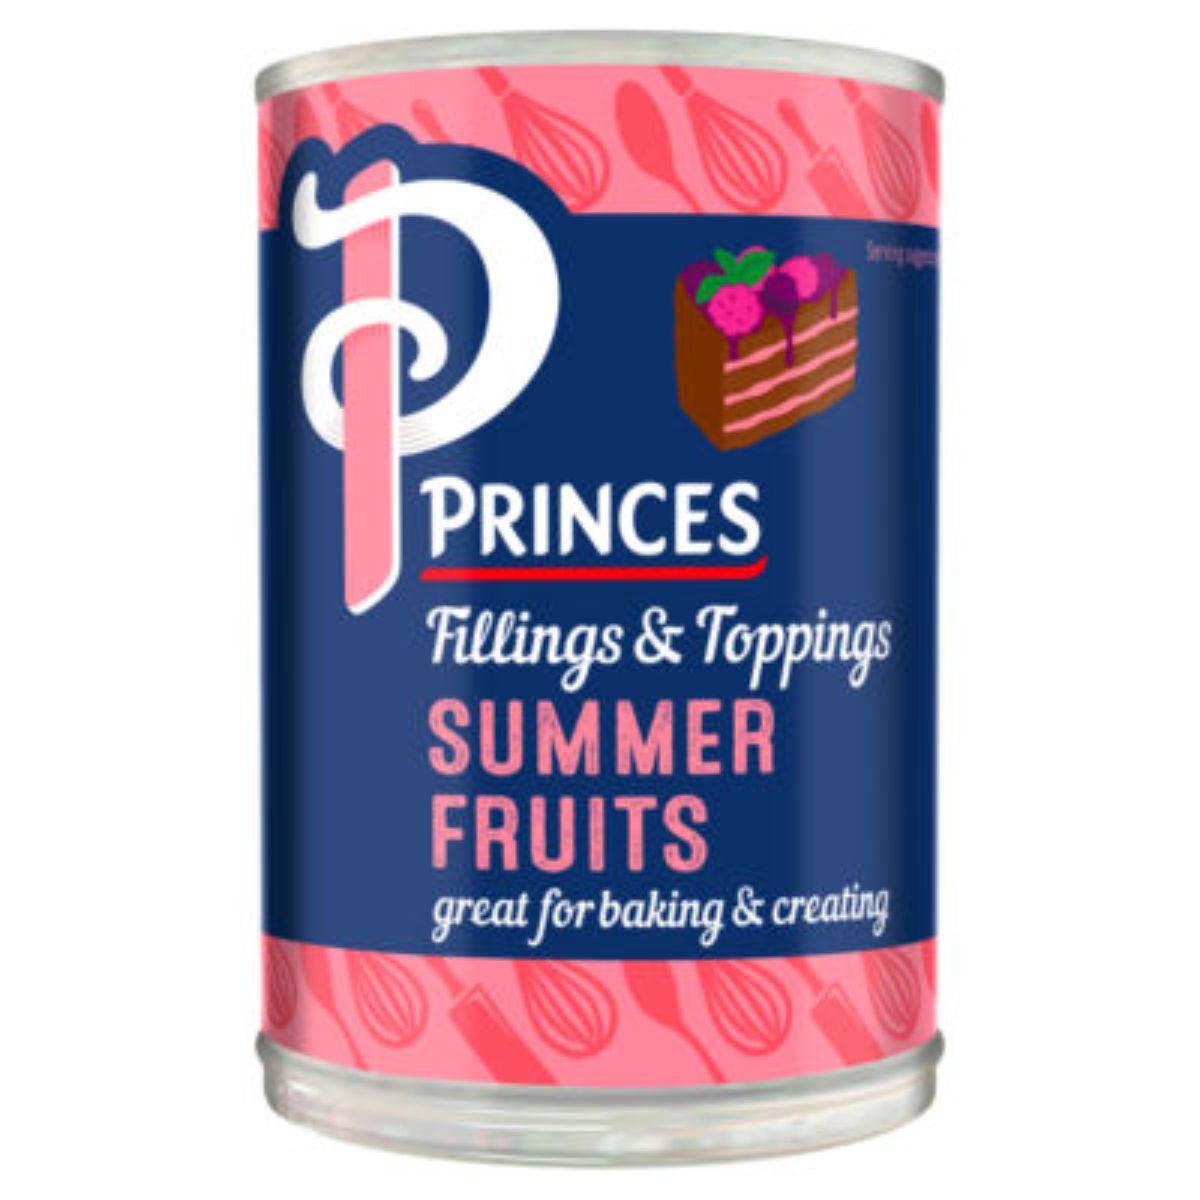 Princes - Fruit Filling Summer Fruits - 410g fillings & toppings summer fruits.